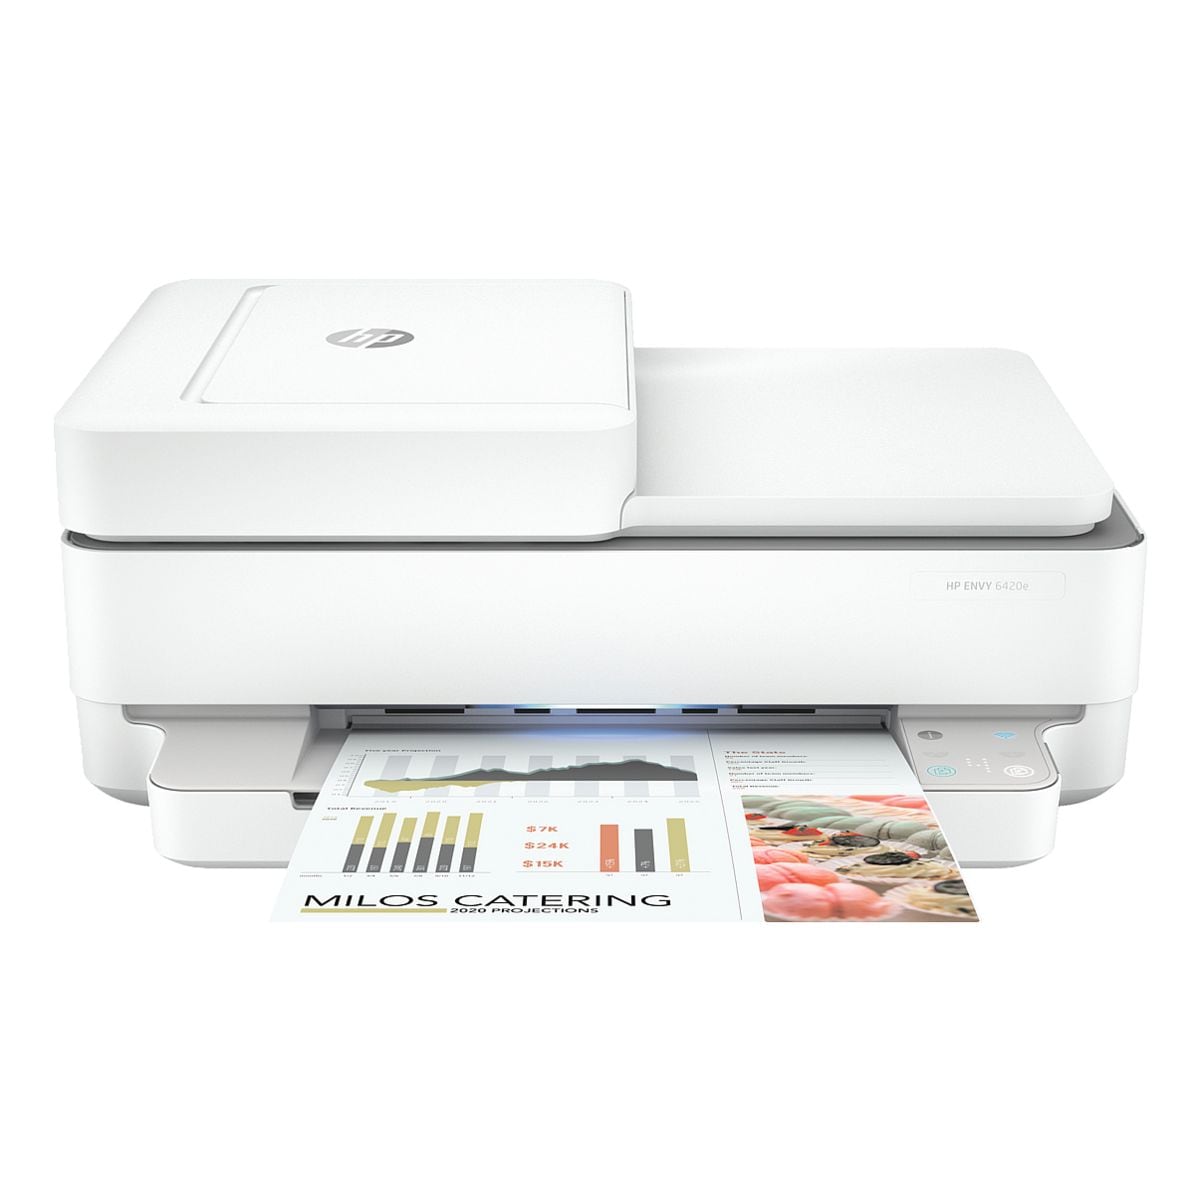 HP ENVY 6420e Multifunktionsdrucker, A4 Farb-Tintenstrahldrucker mit WLAN - HP Instant Ink-fhig